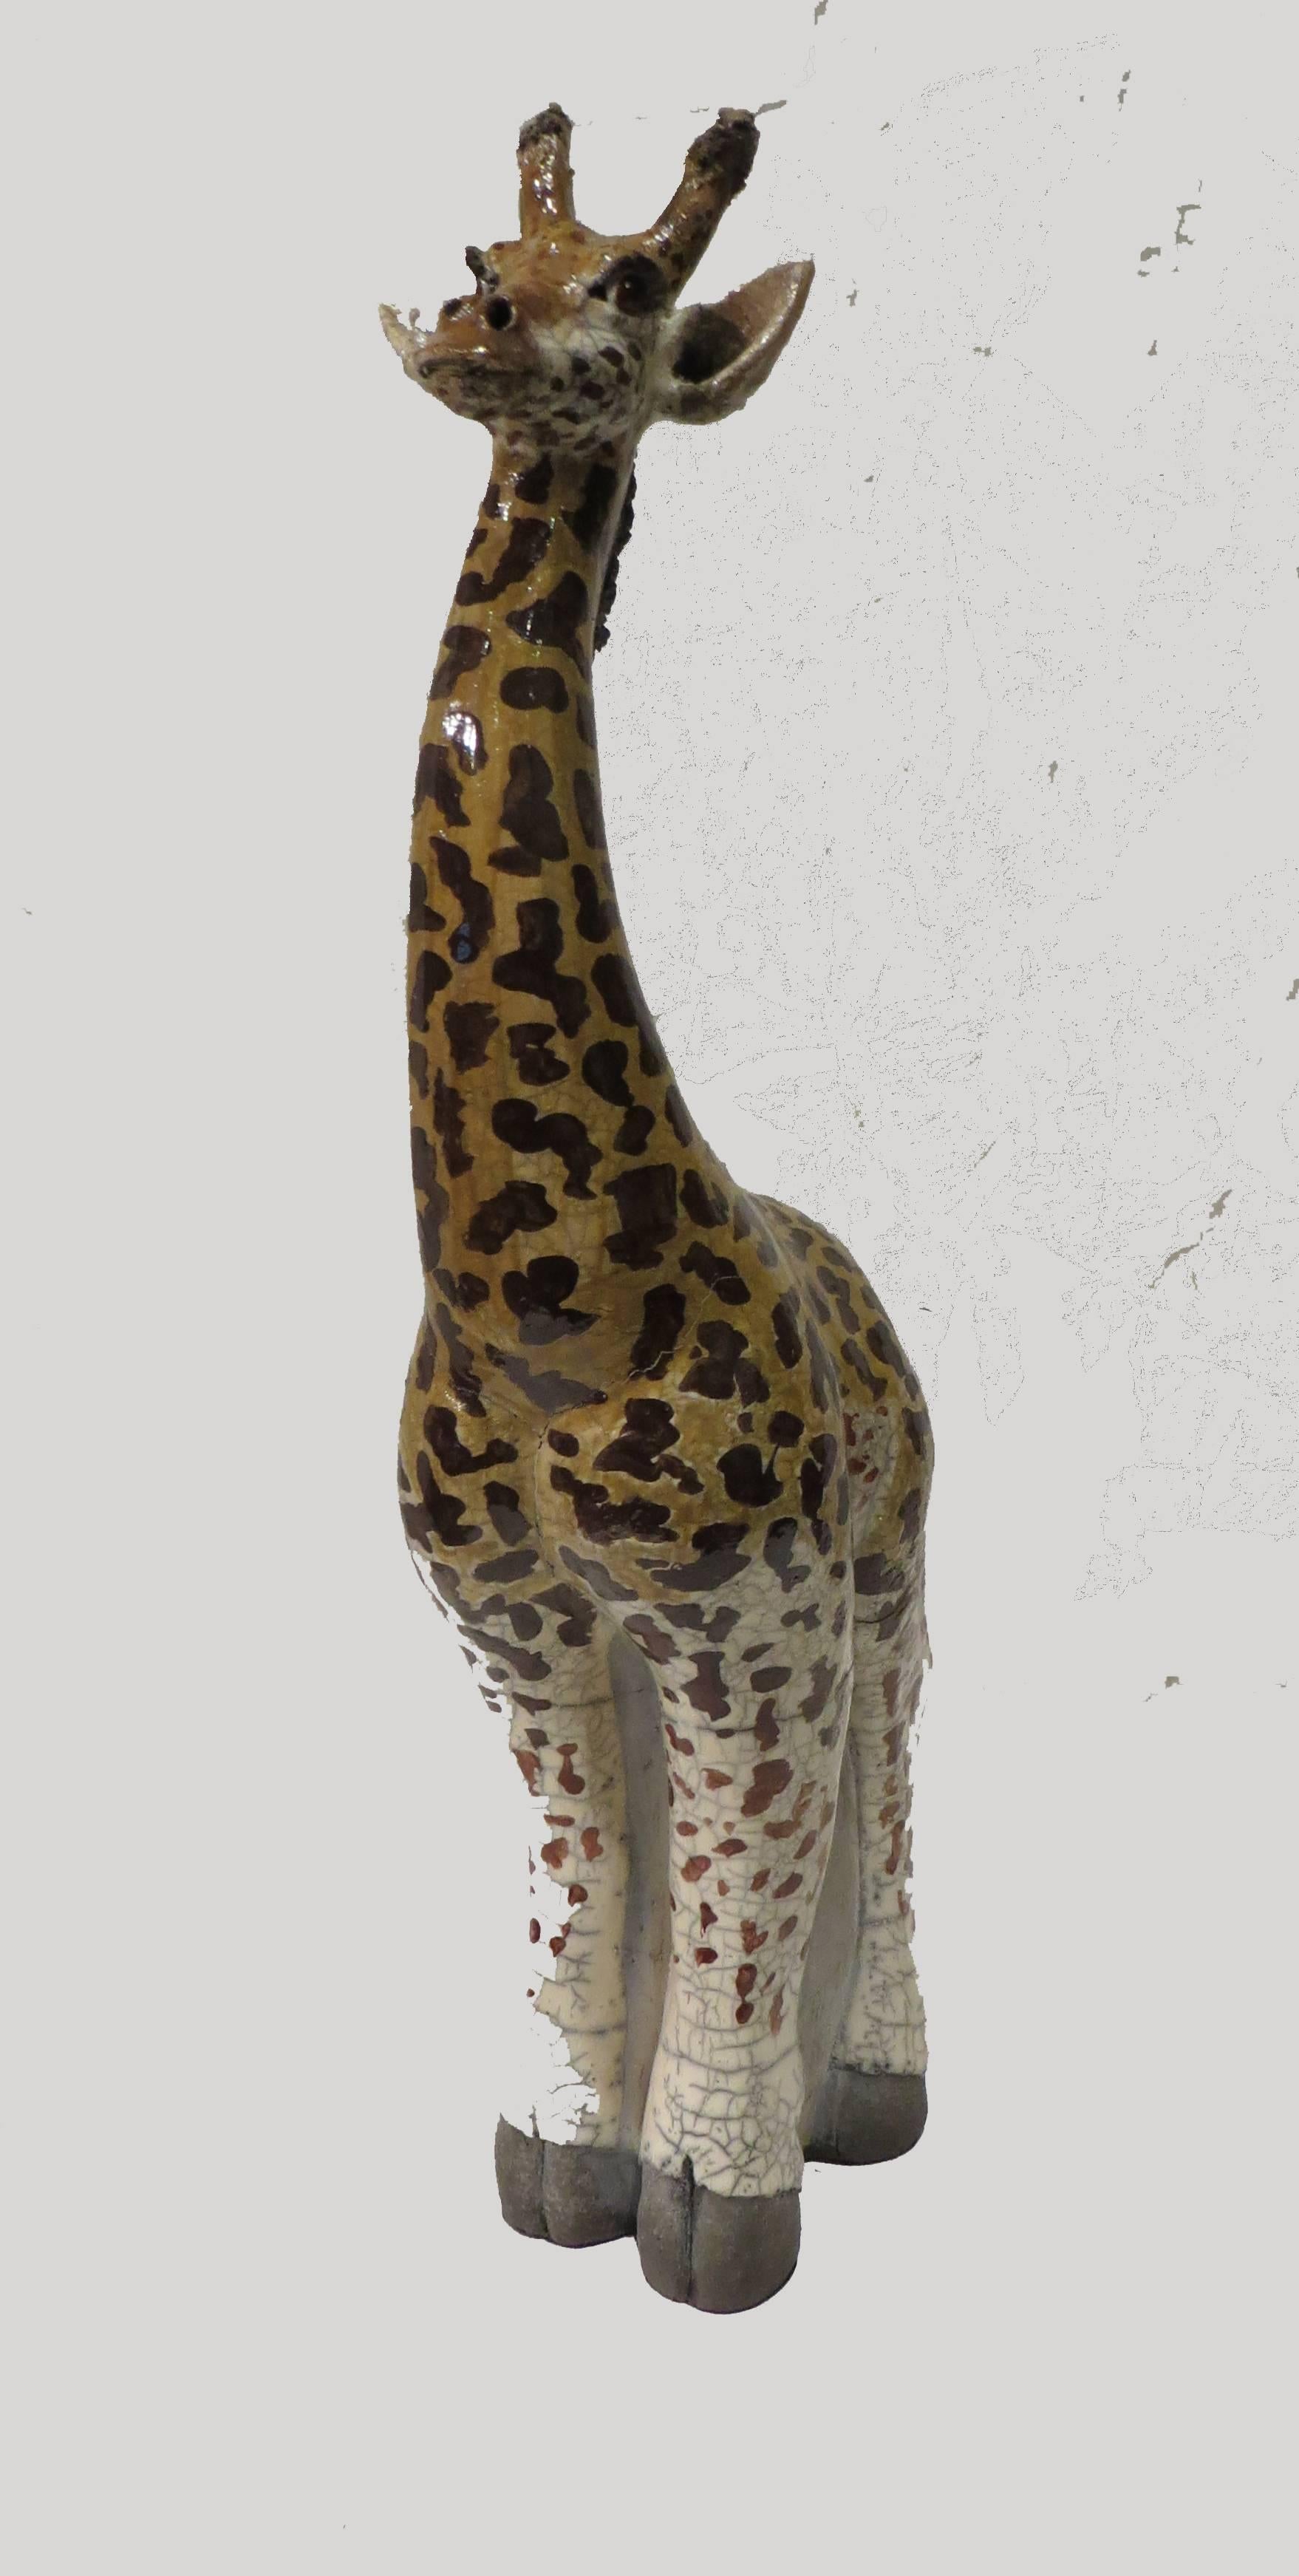 Nicole Doray Soulard Figurative Sculpture - Girafe in Terracotta